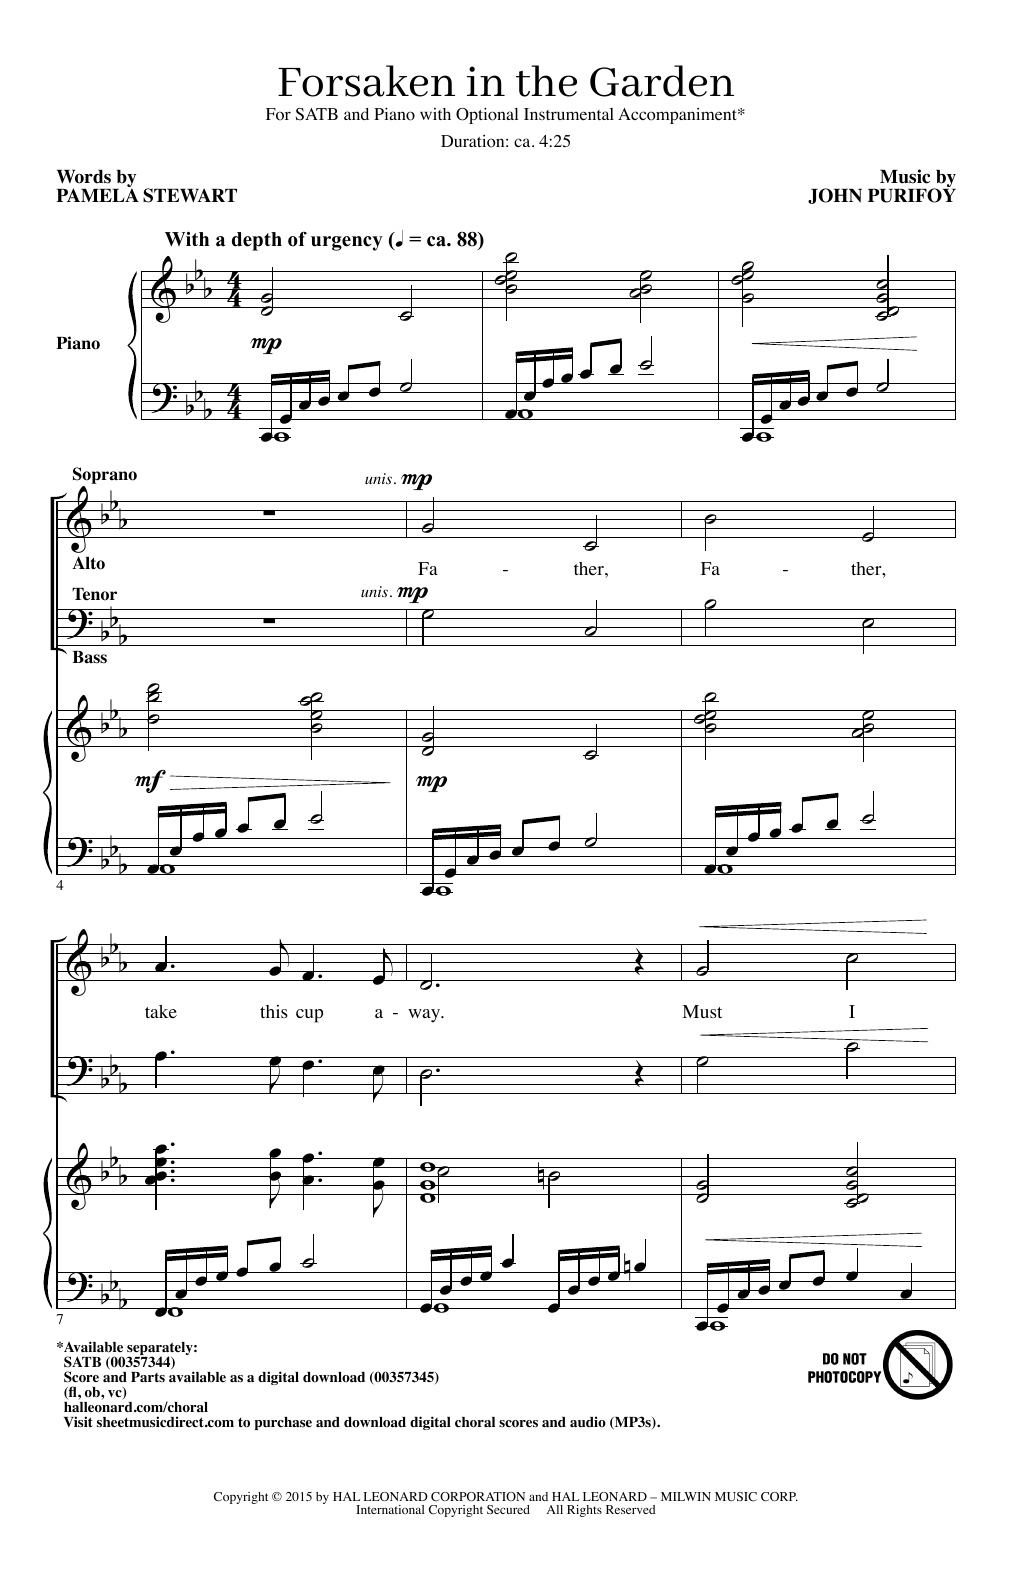 Pamela Stewart and John Purifoy Forsaken In The Garden Sheet Music Notes & Chords for SATB Choir - Download or Print PDF